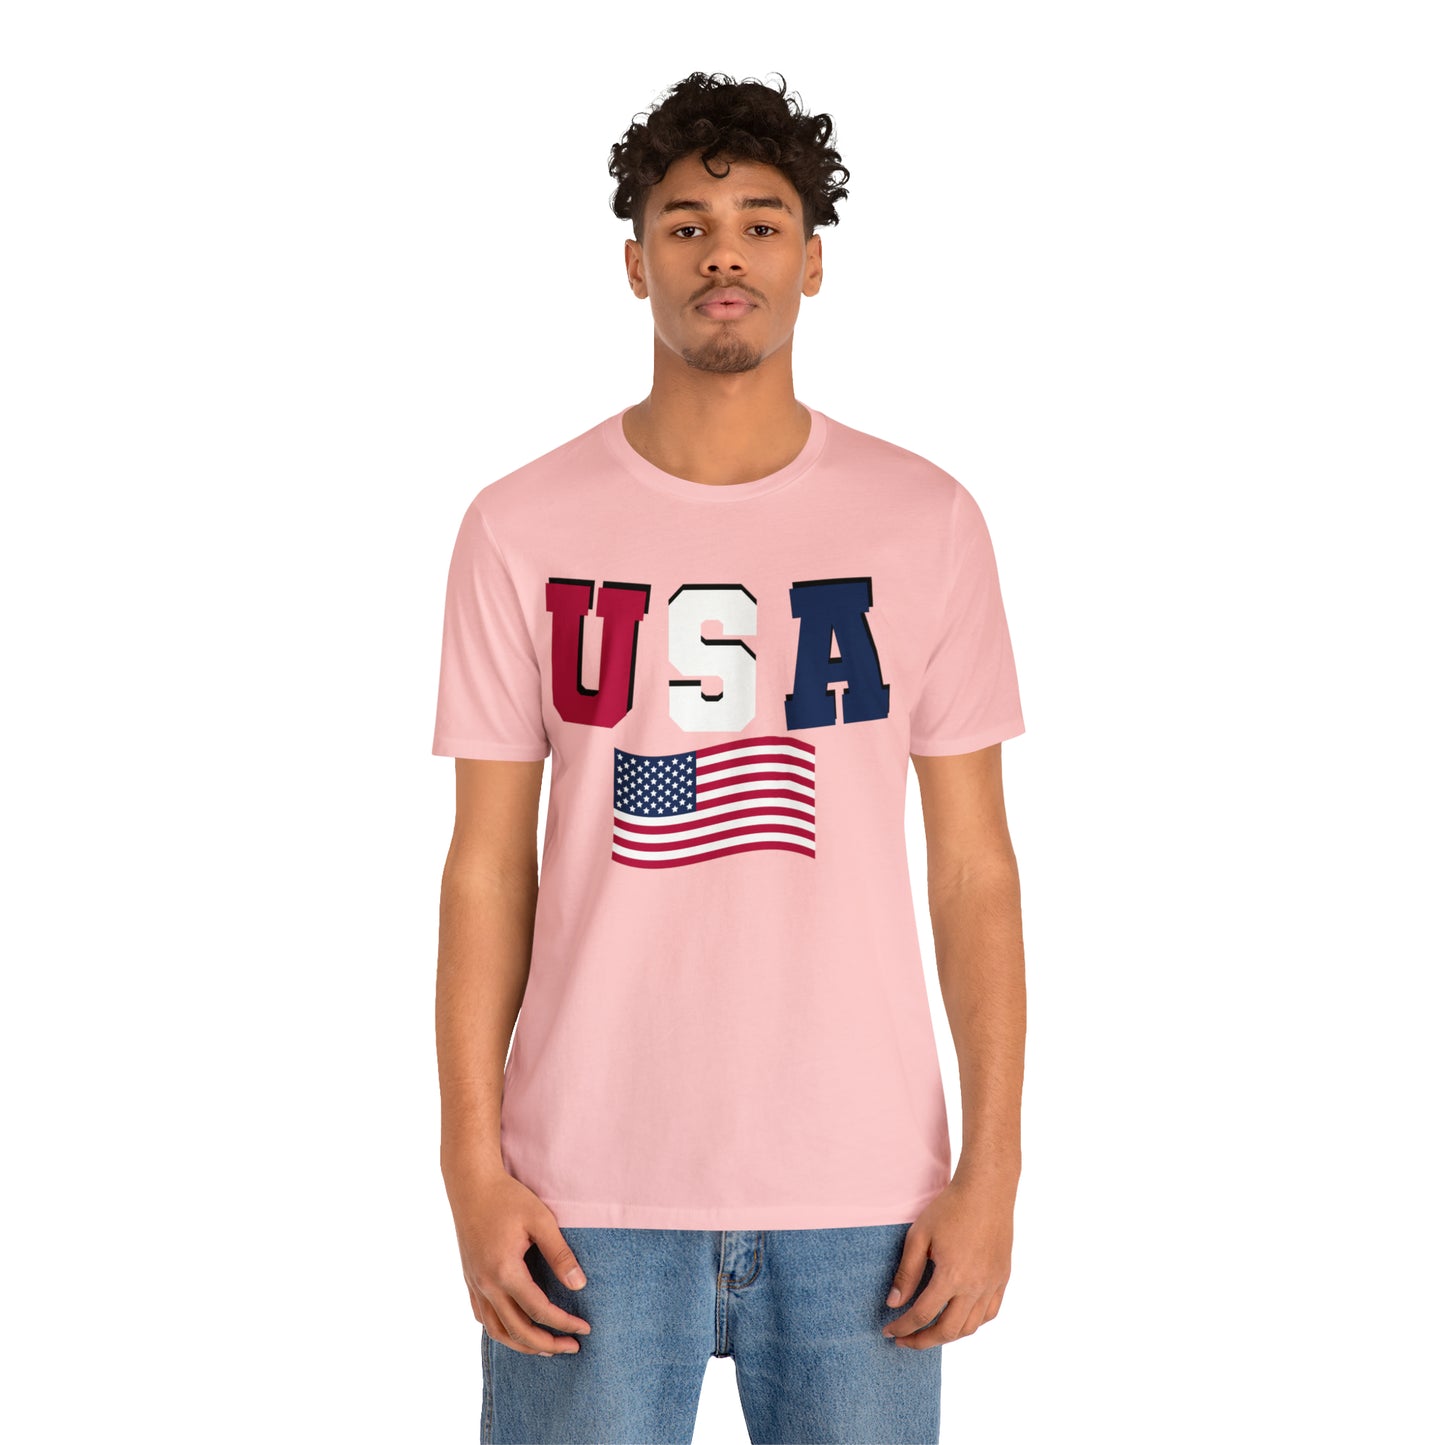 4th of July shirt, USA shirt American flag shirt, Red, white and blue shirt